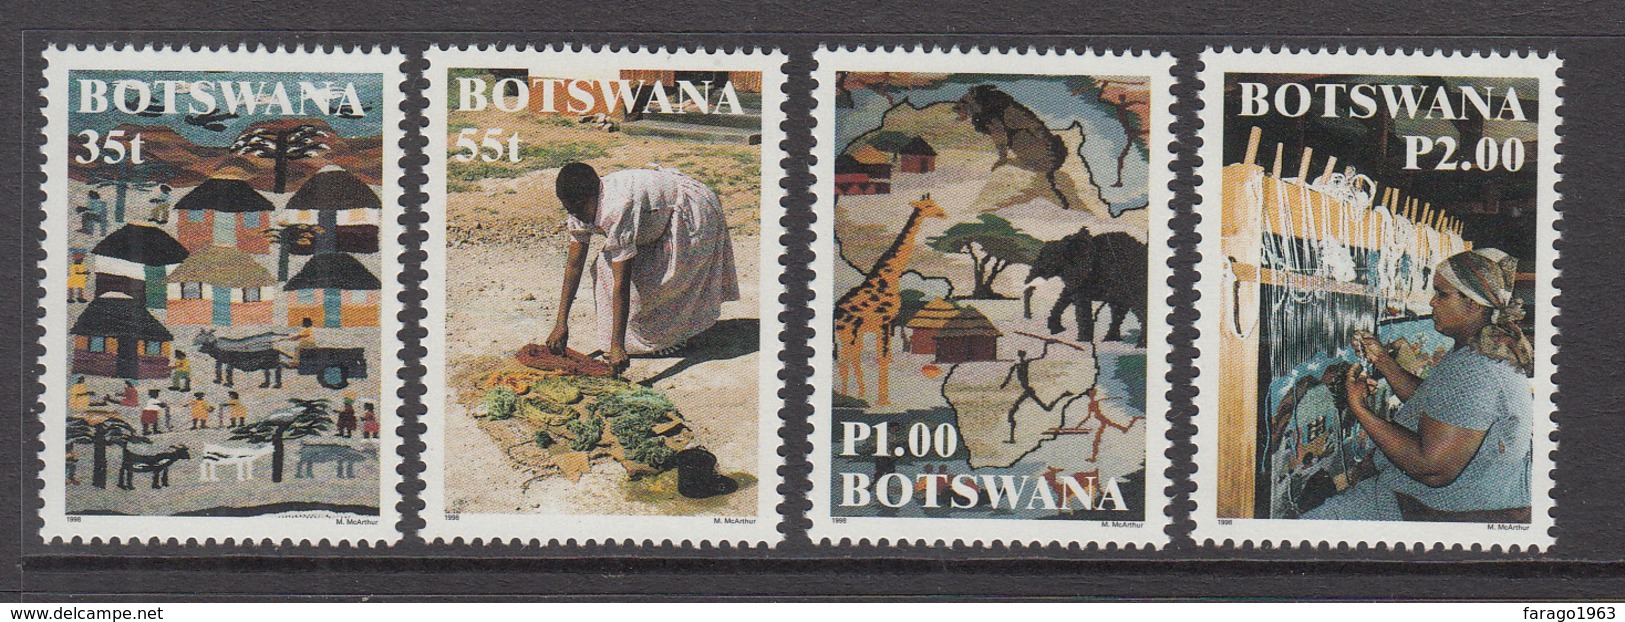 1998 Botswana Textiles Art Complete Set Of 4 MNH - Botswana (1966-...)